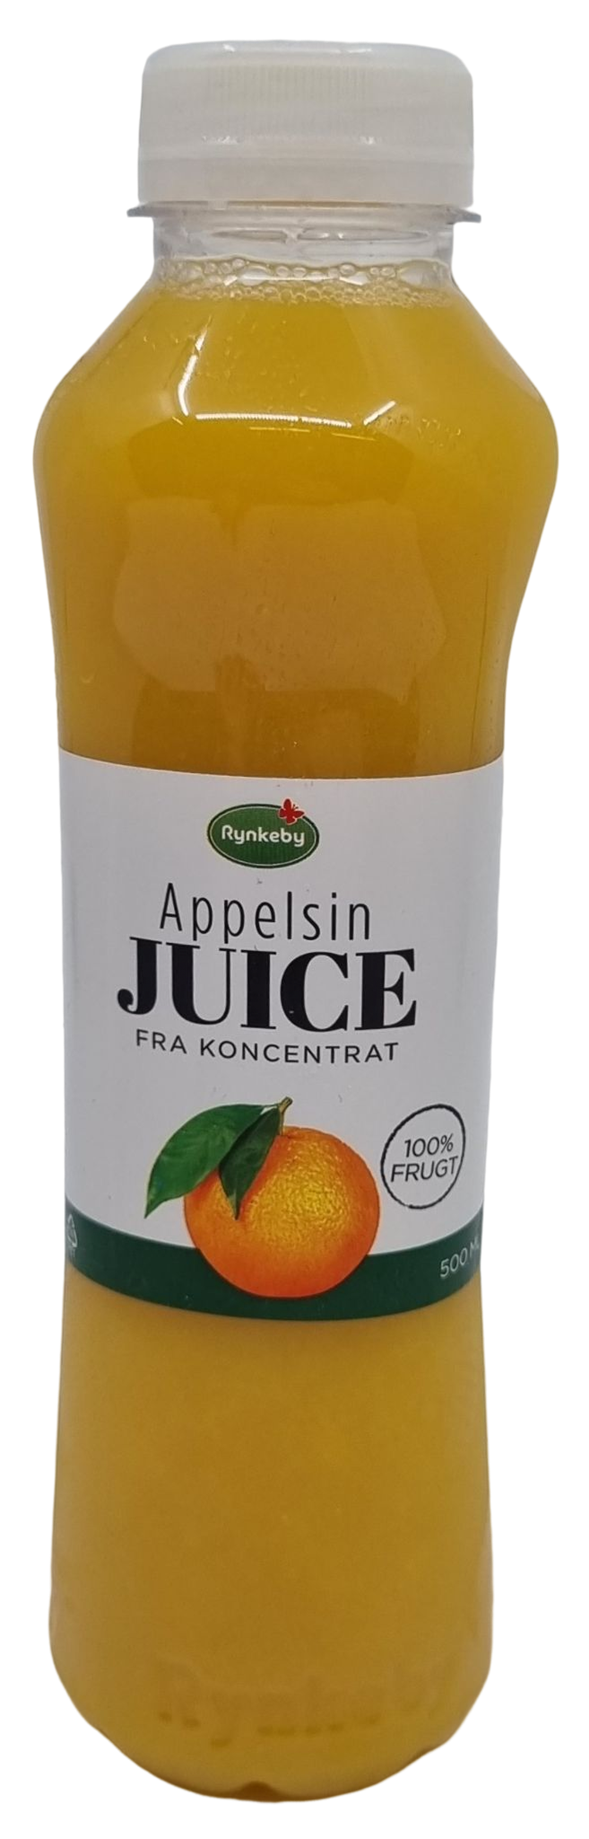 1/2L Rynkeby Appelsin Juice